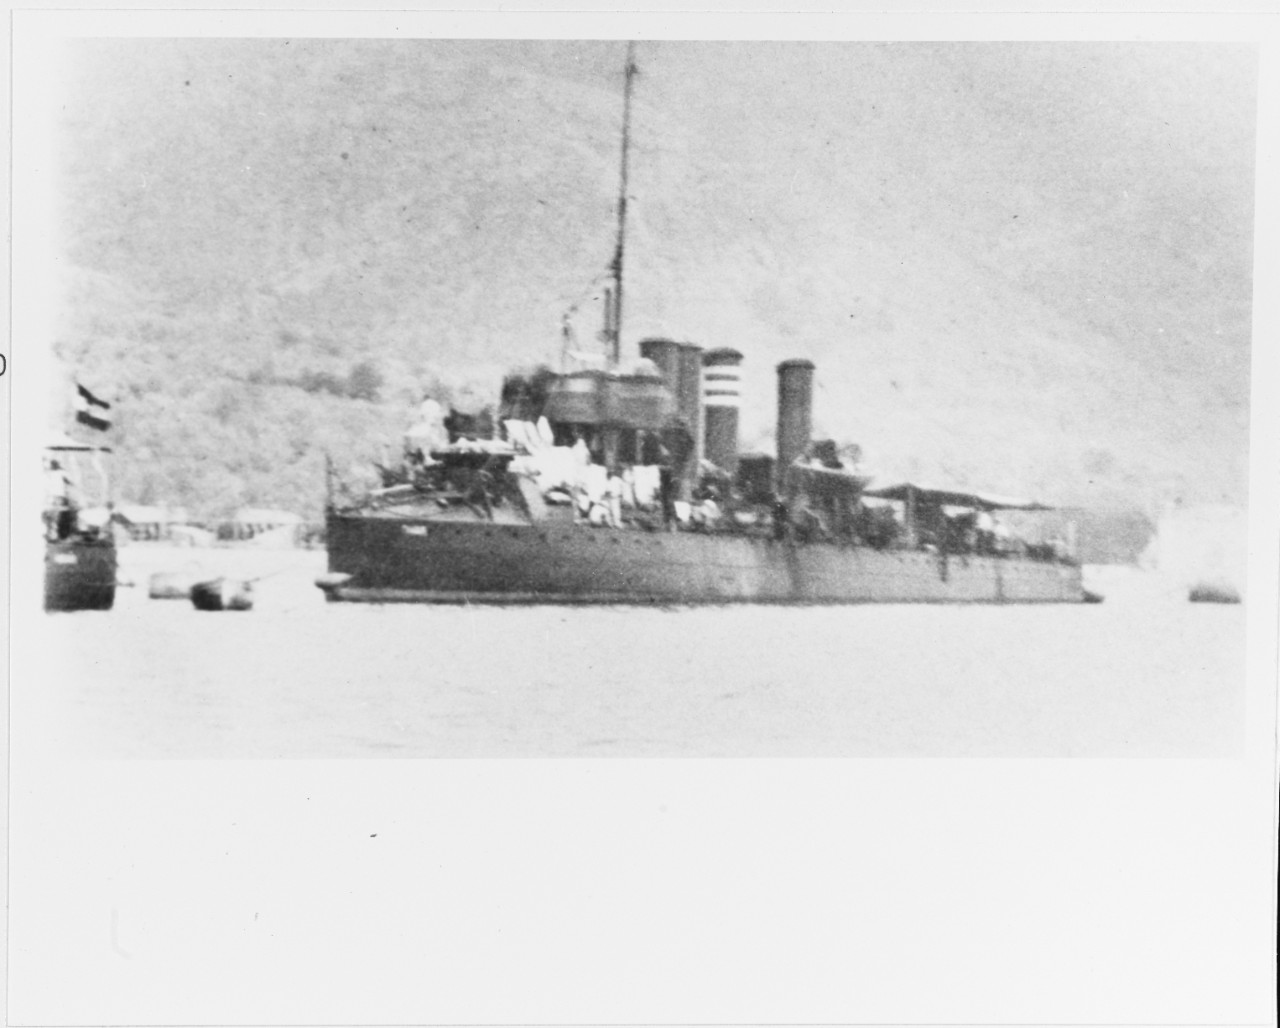 TURUL (Austrian Destroyer, 1908-1920)